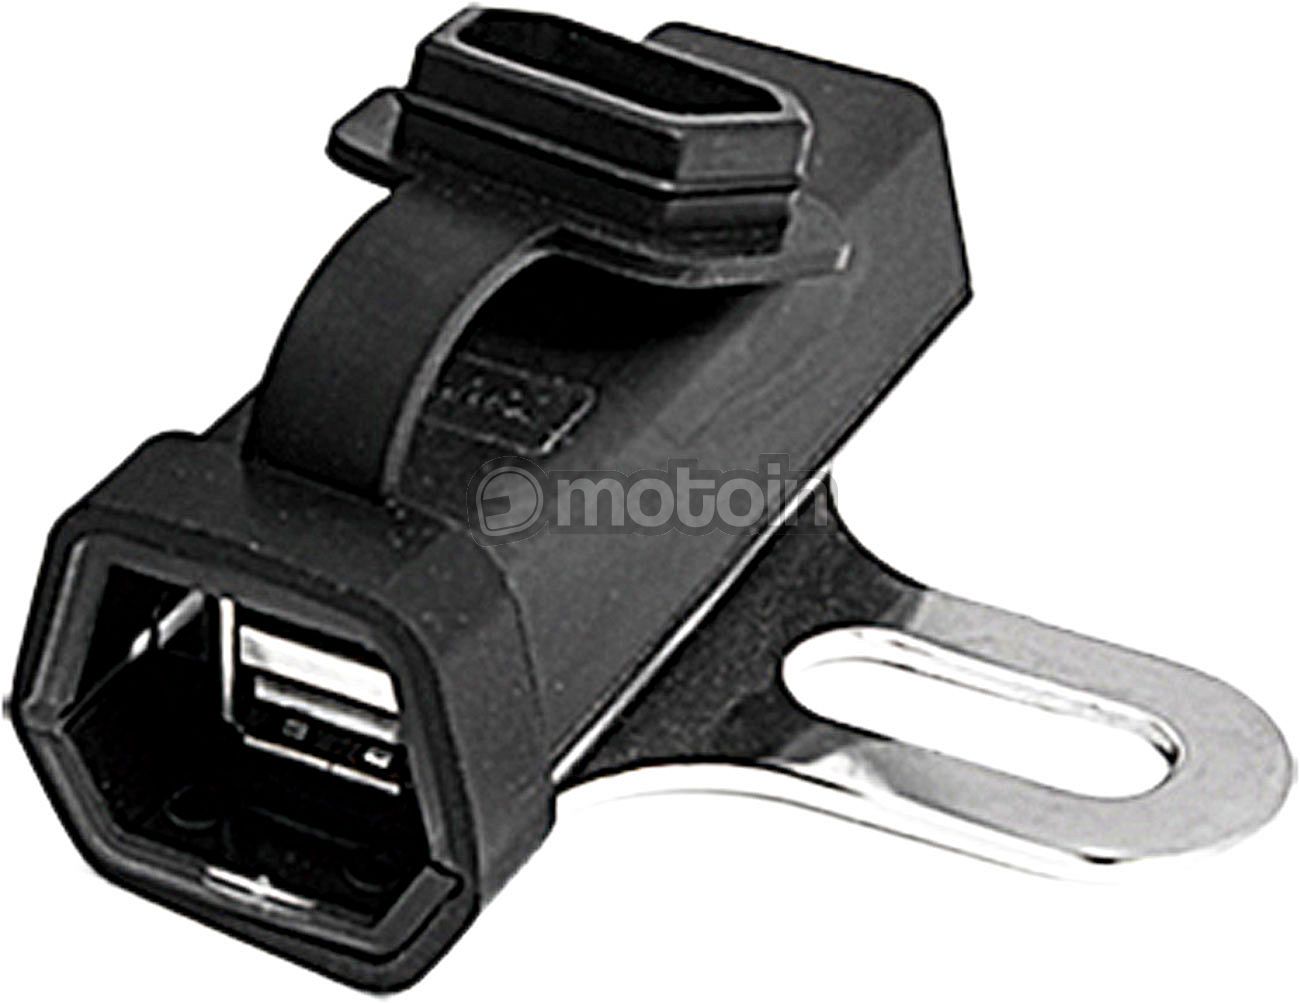 Booster 180-3024, doppia presa USB